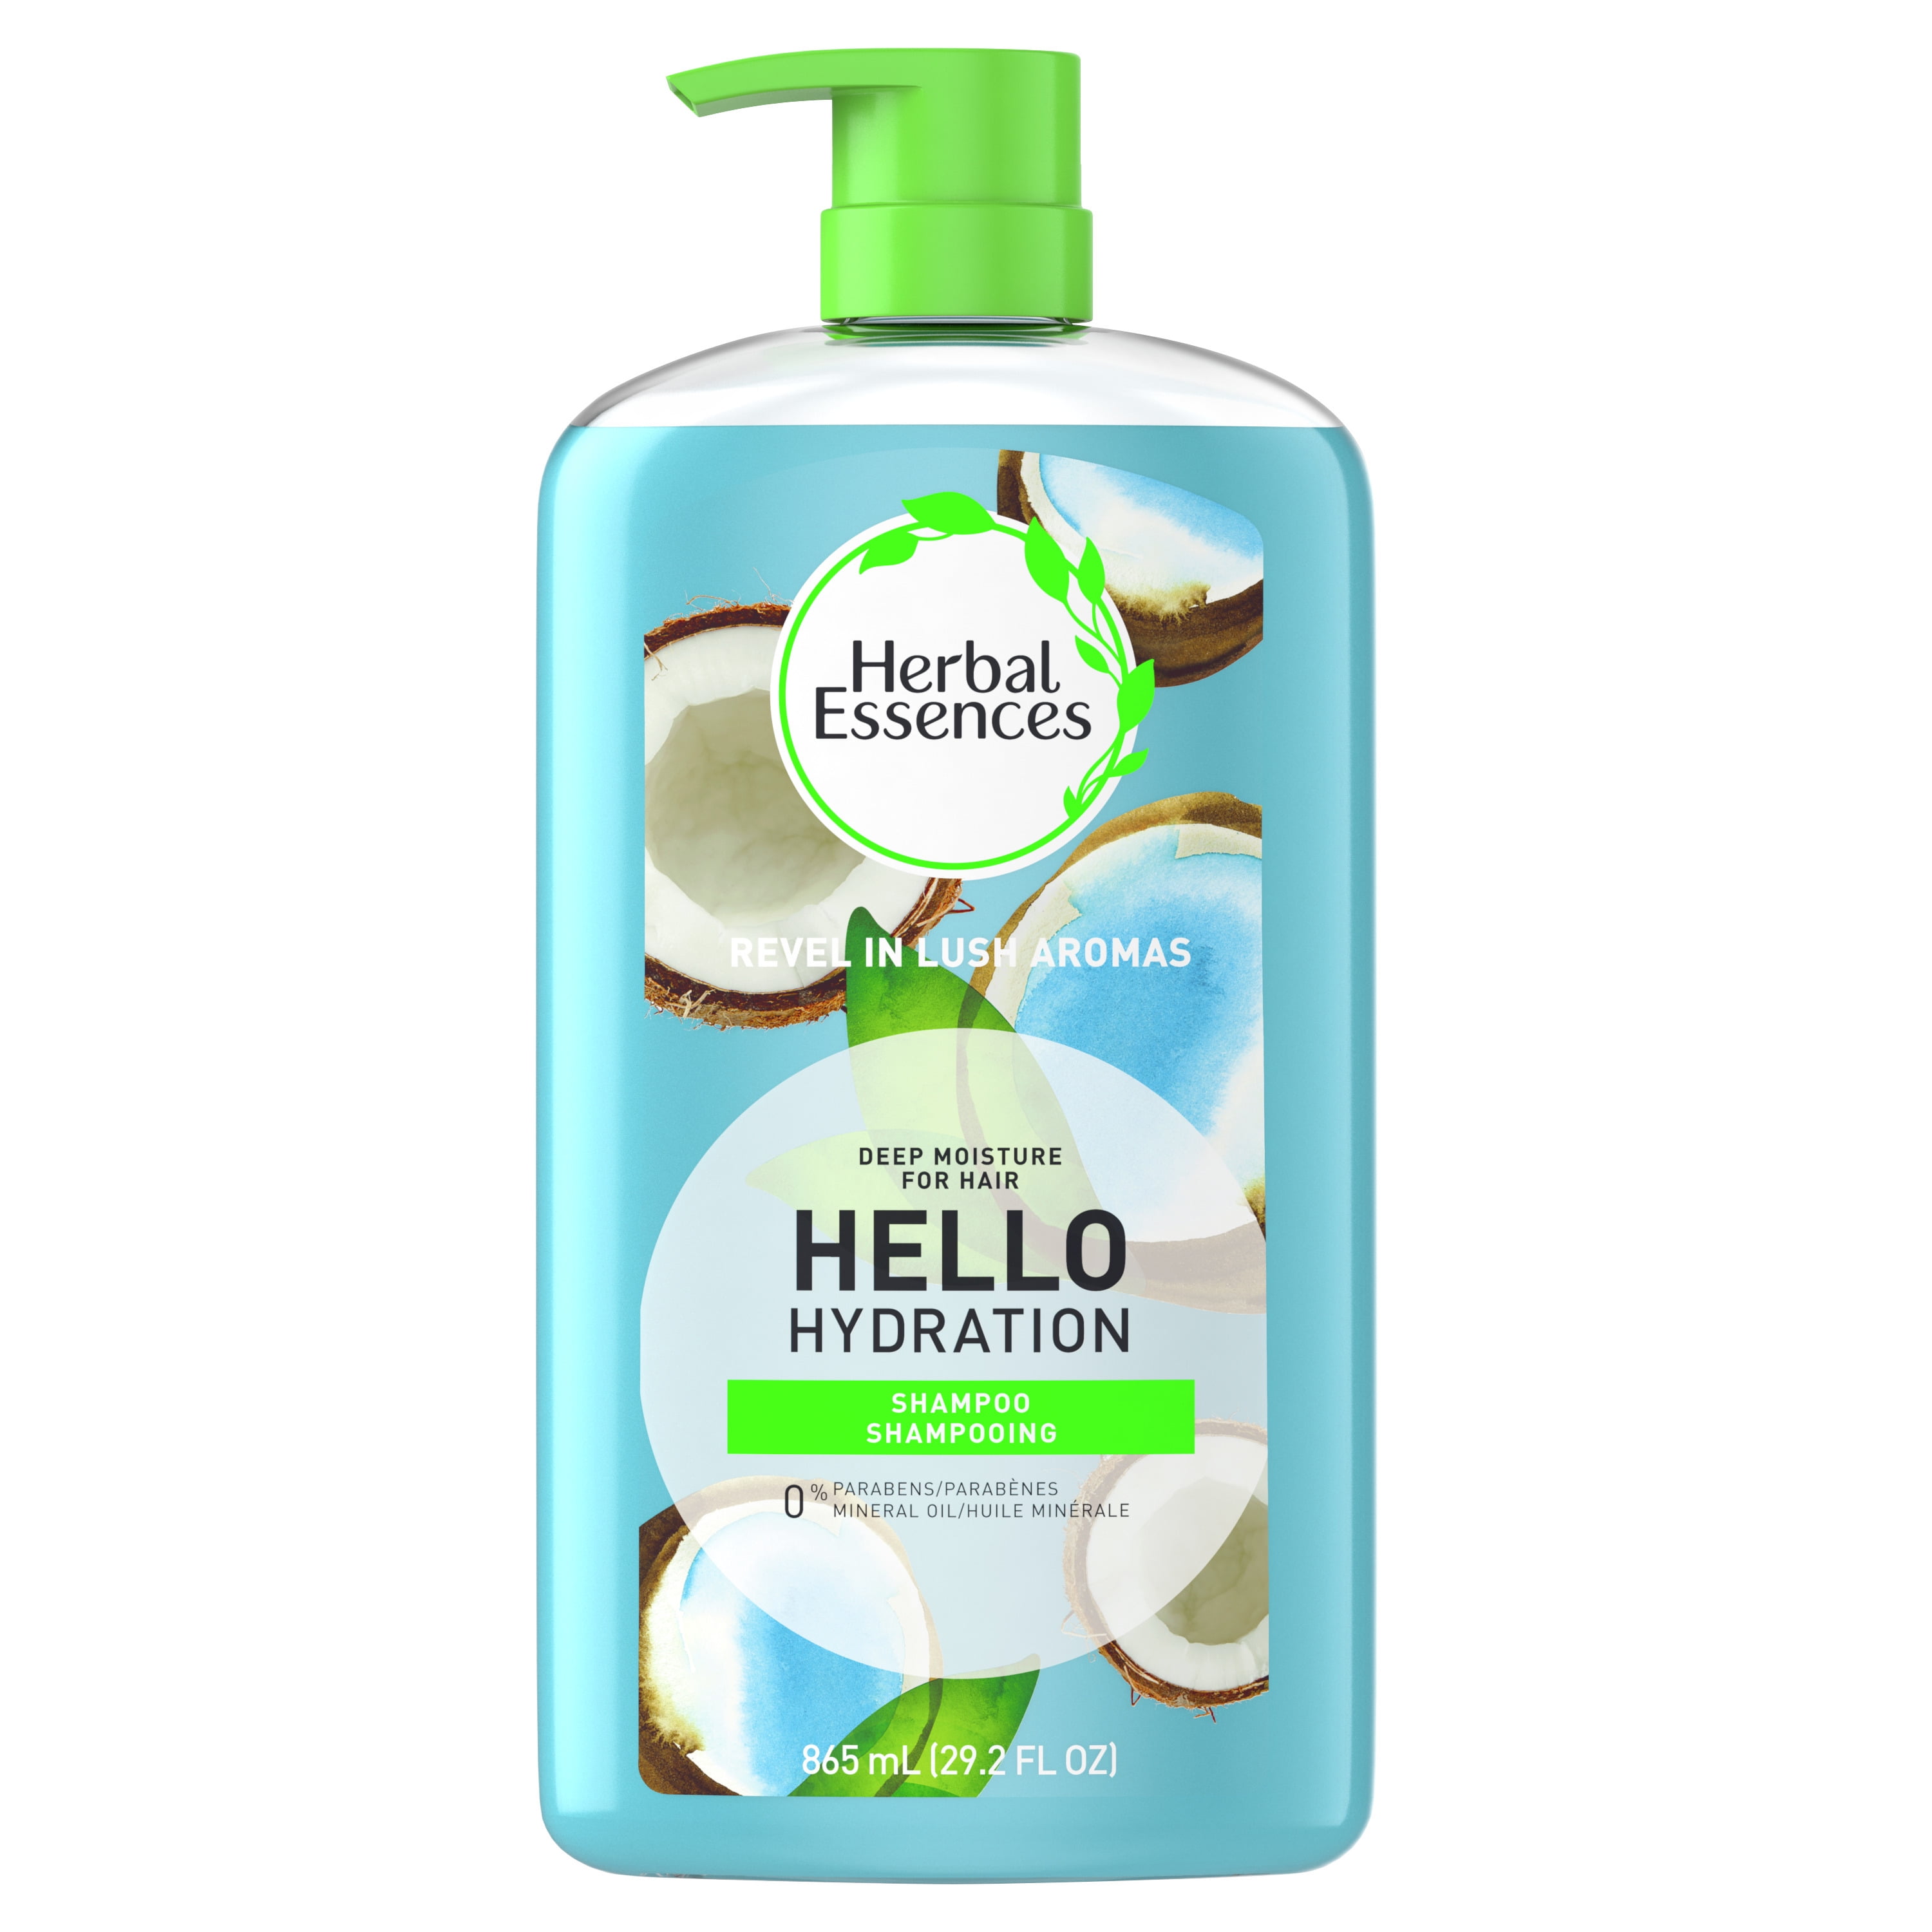 Diagnose Vejhus akse Herbal Essences Hello Hydration Shampoo and Body Wash, 29.2 fl oz -  Walmart.com